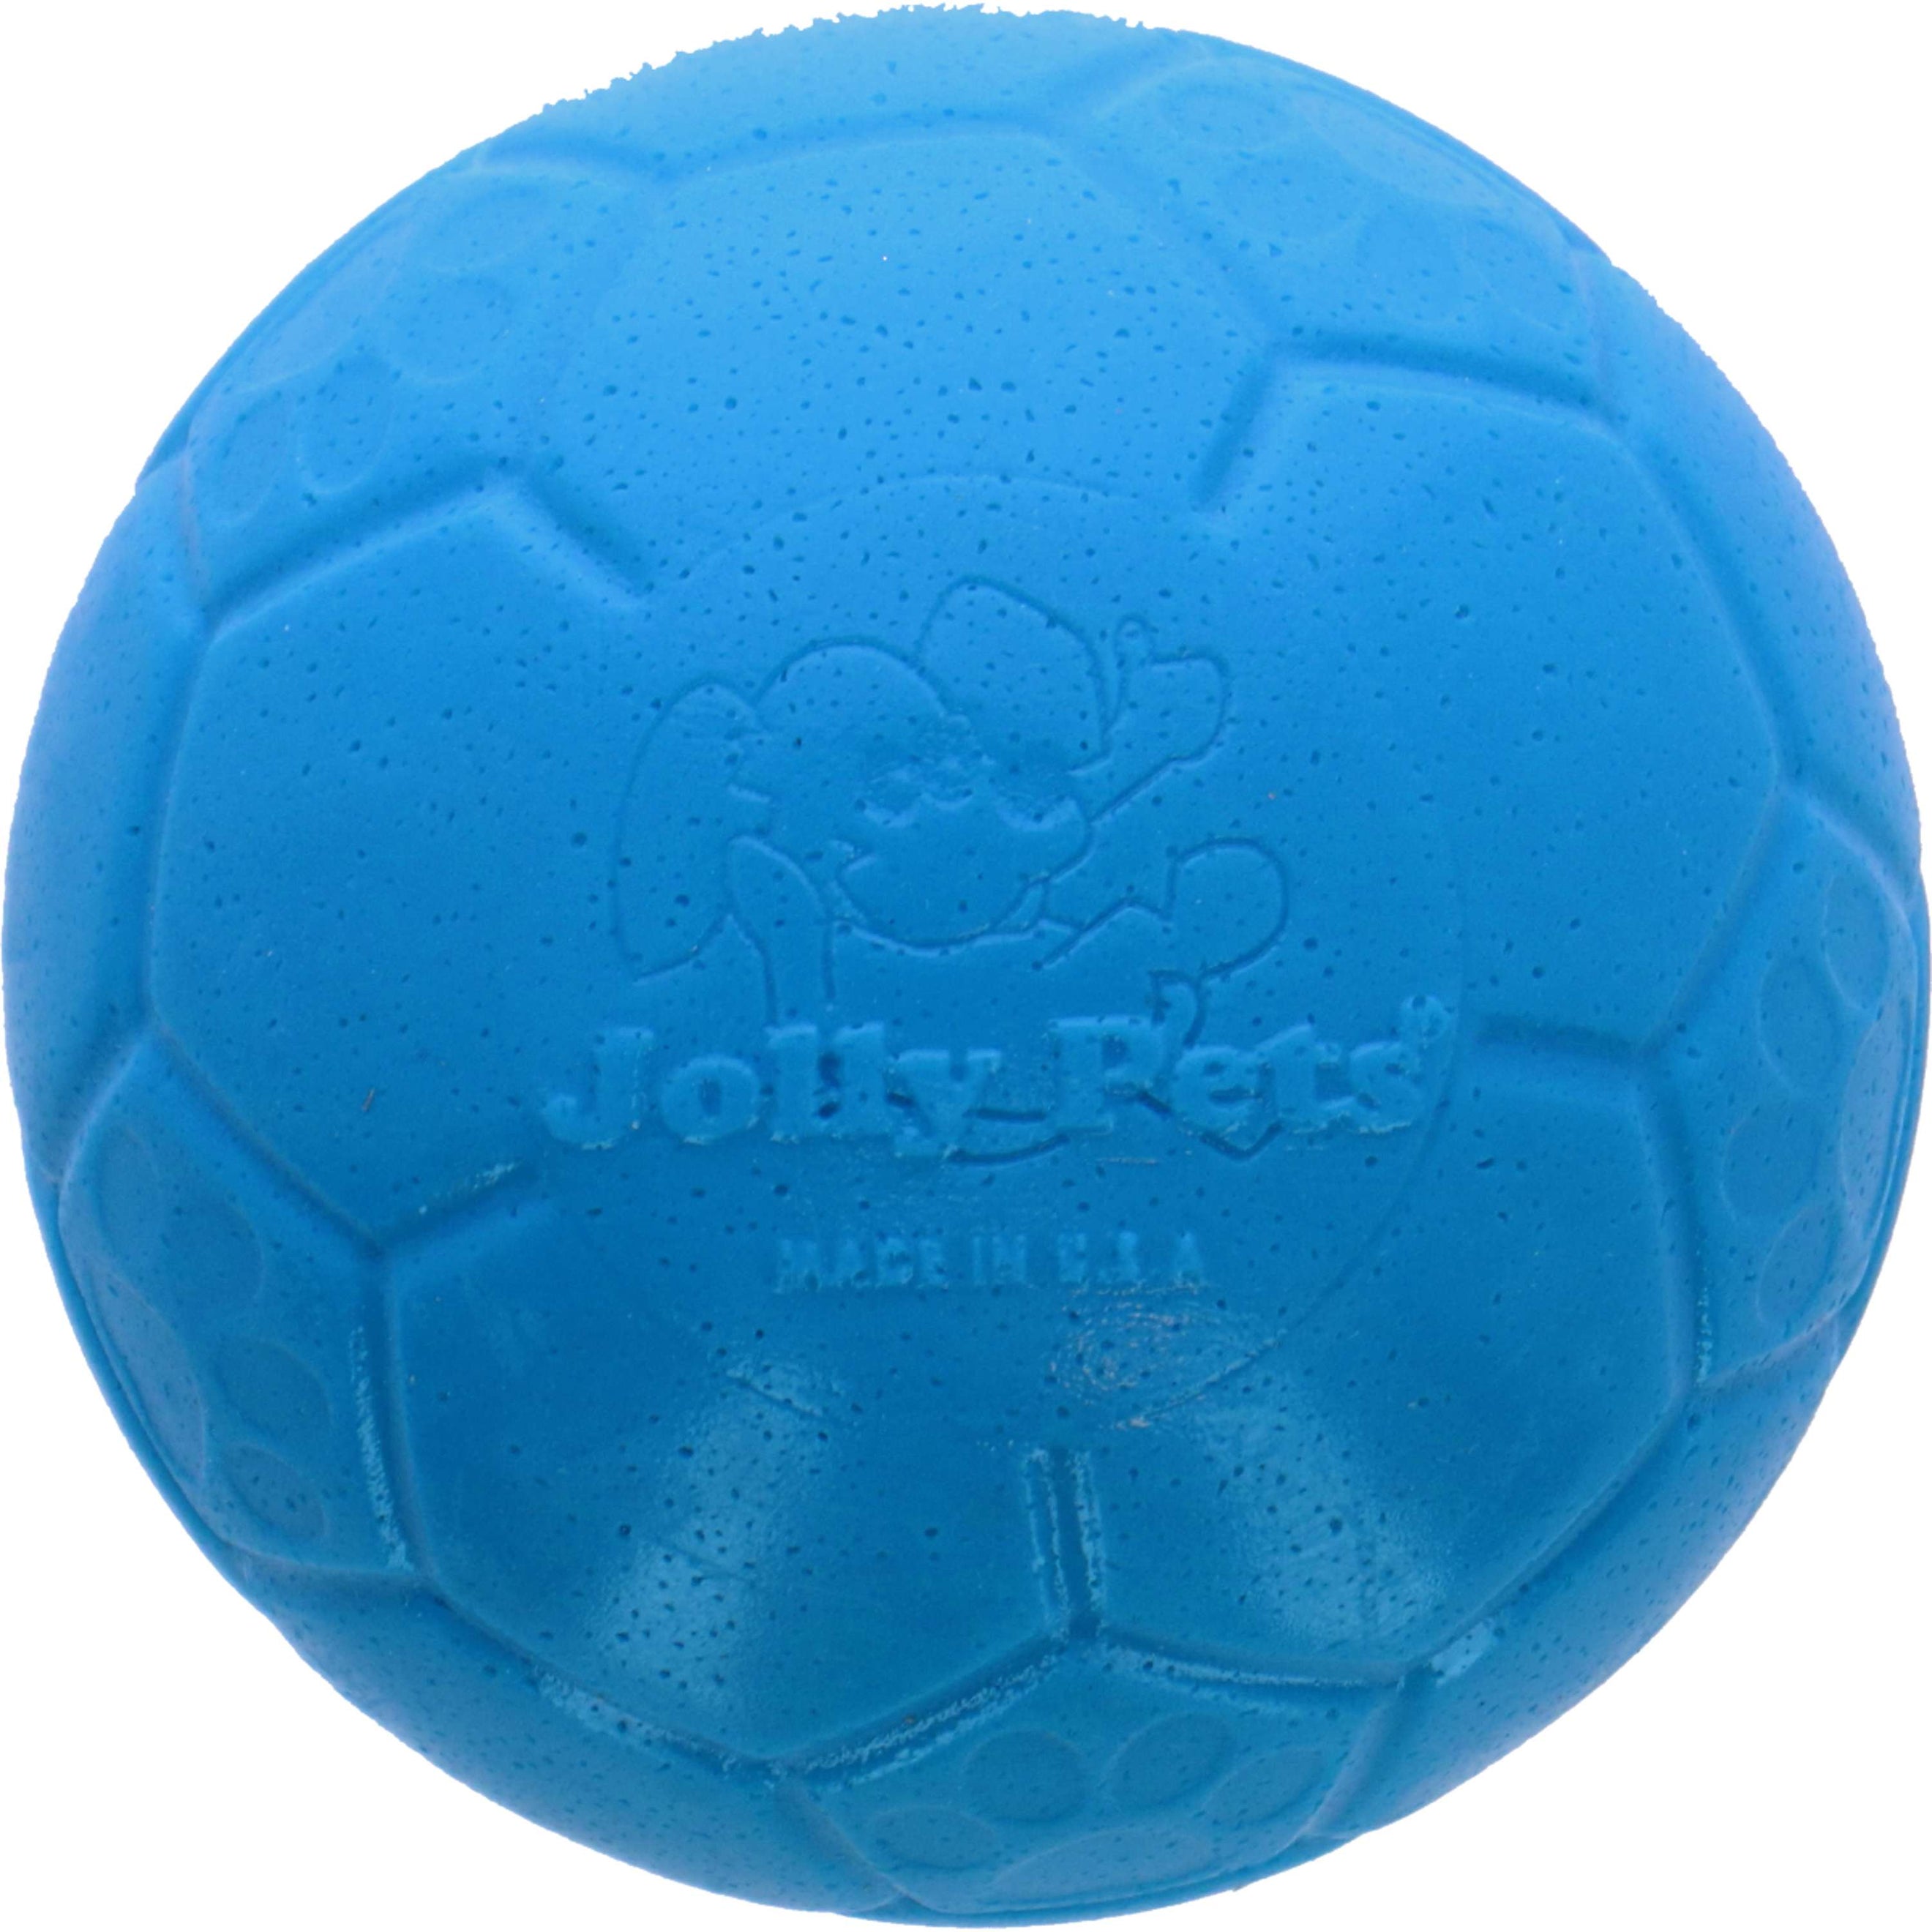 Jolly Ball Balle de Jeu Soccer Ball Bleu océan